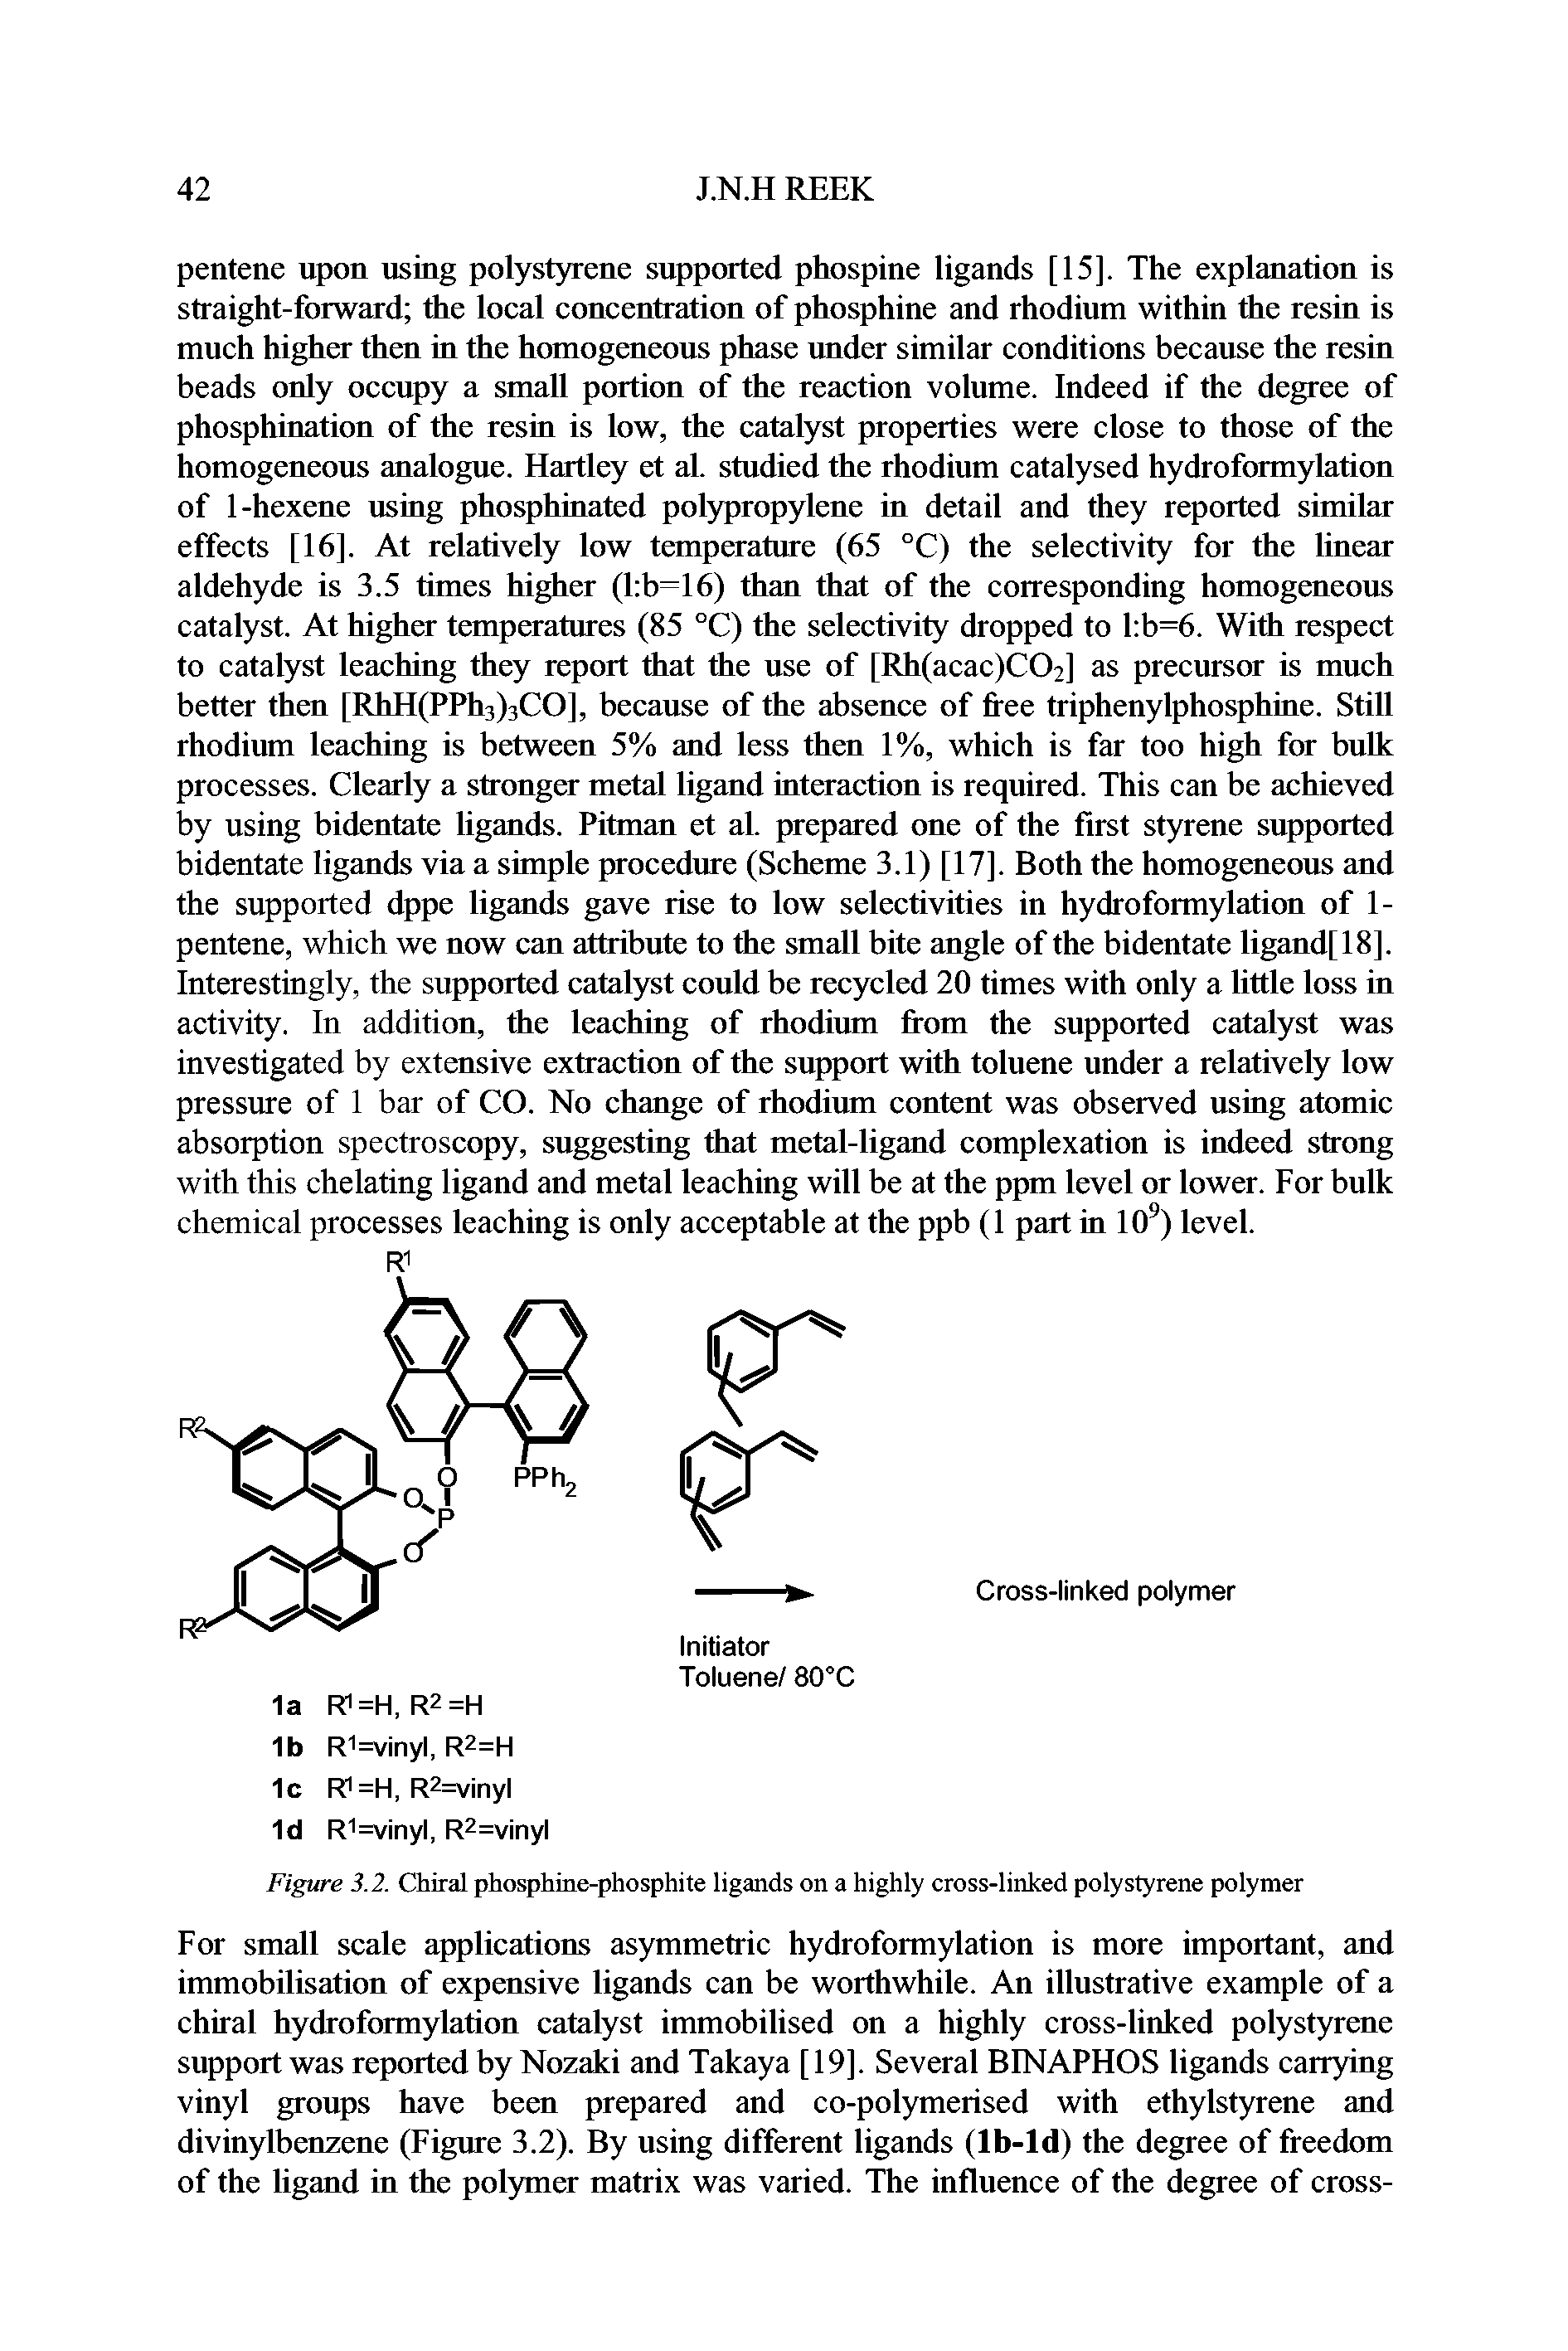 Figure 3.2. Chiral phosphine-phosphite ligands on a highly cross-linked polystyrene polymer...